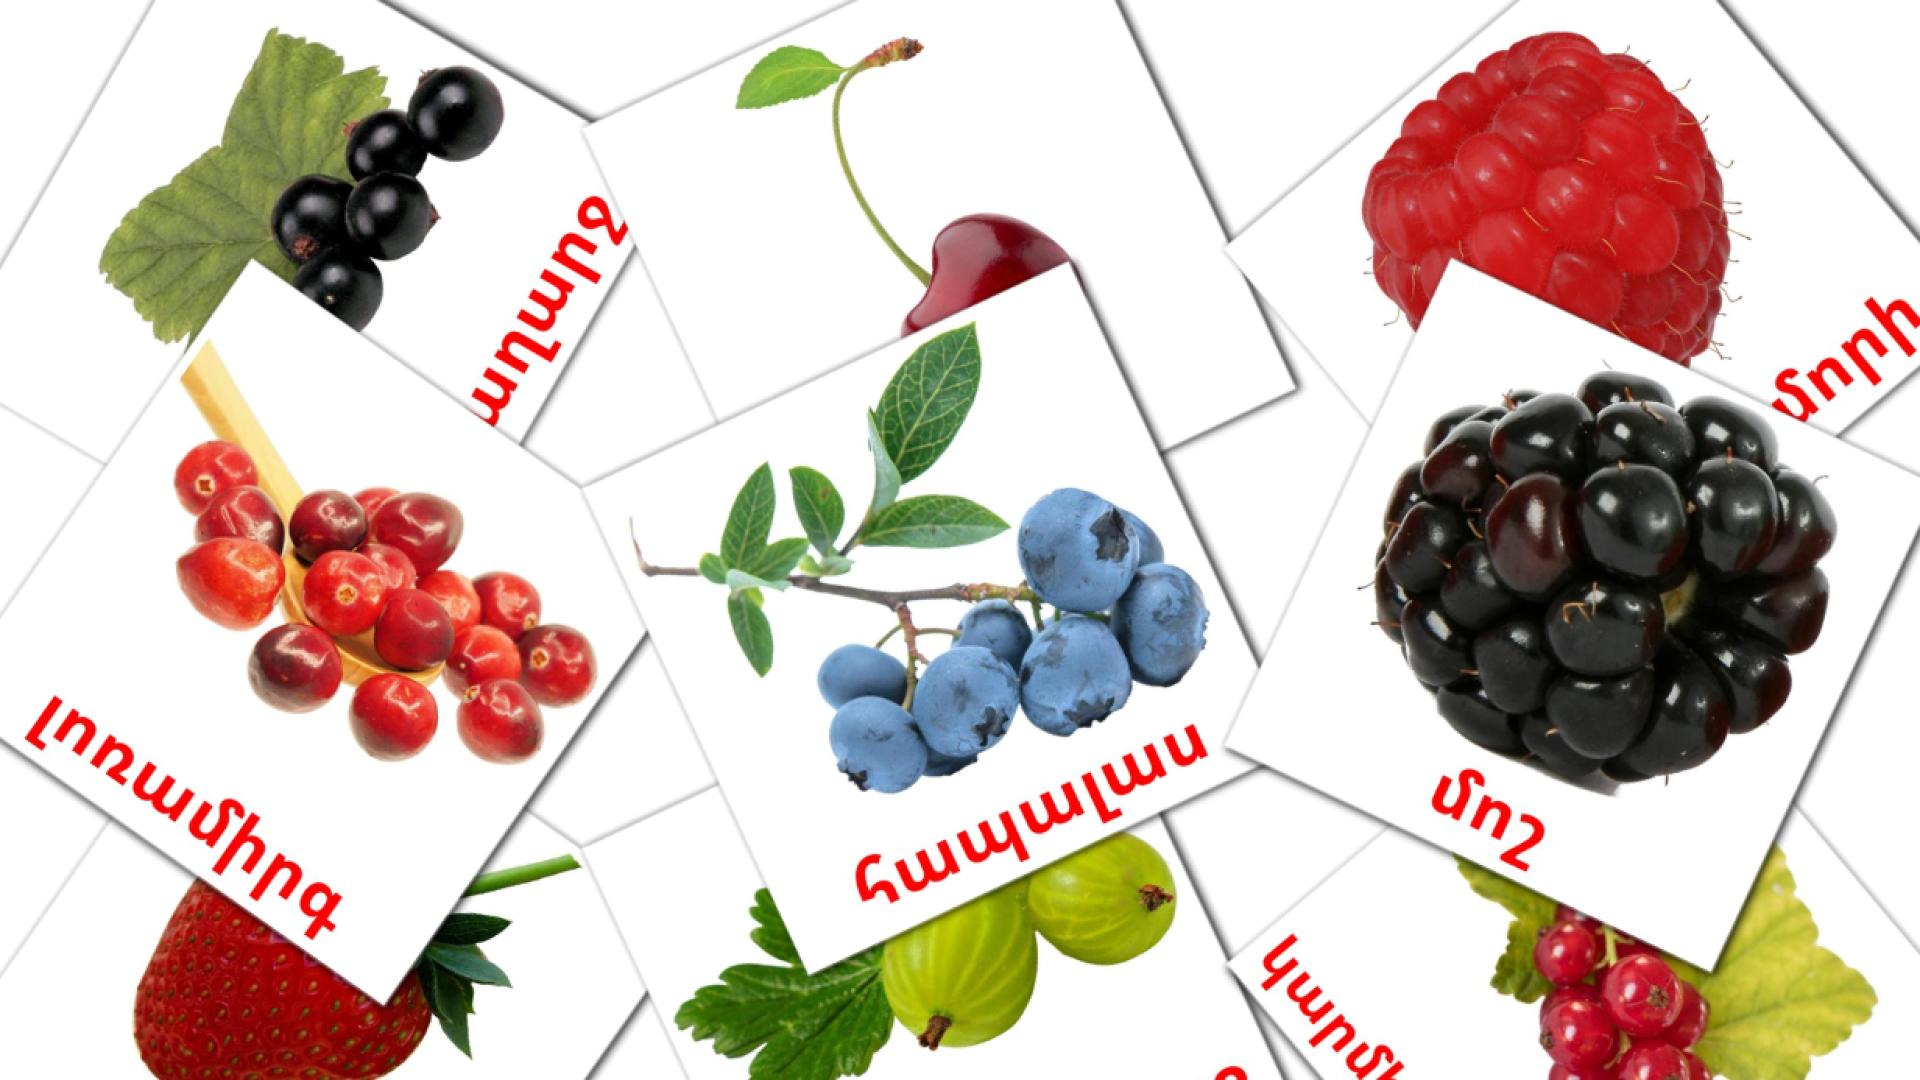 Berries - armenian vocabulary cards